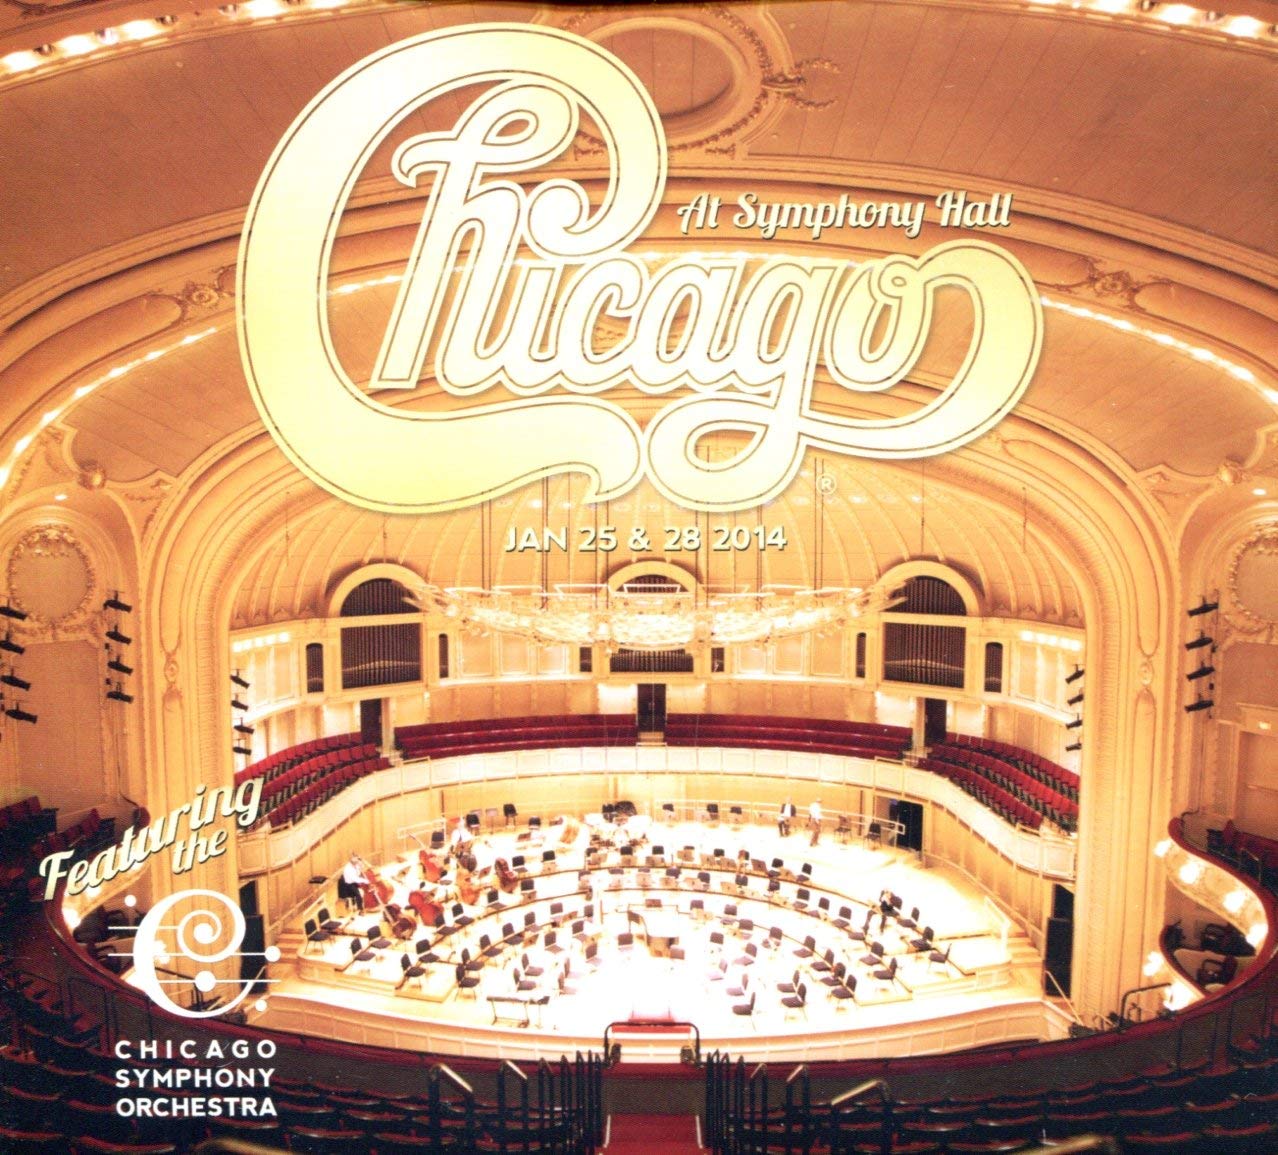 CHICAGO - Chicago @ Symphony Hall cover 